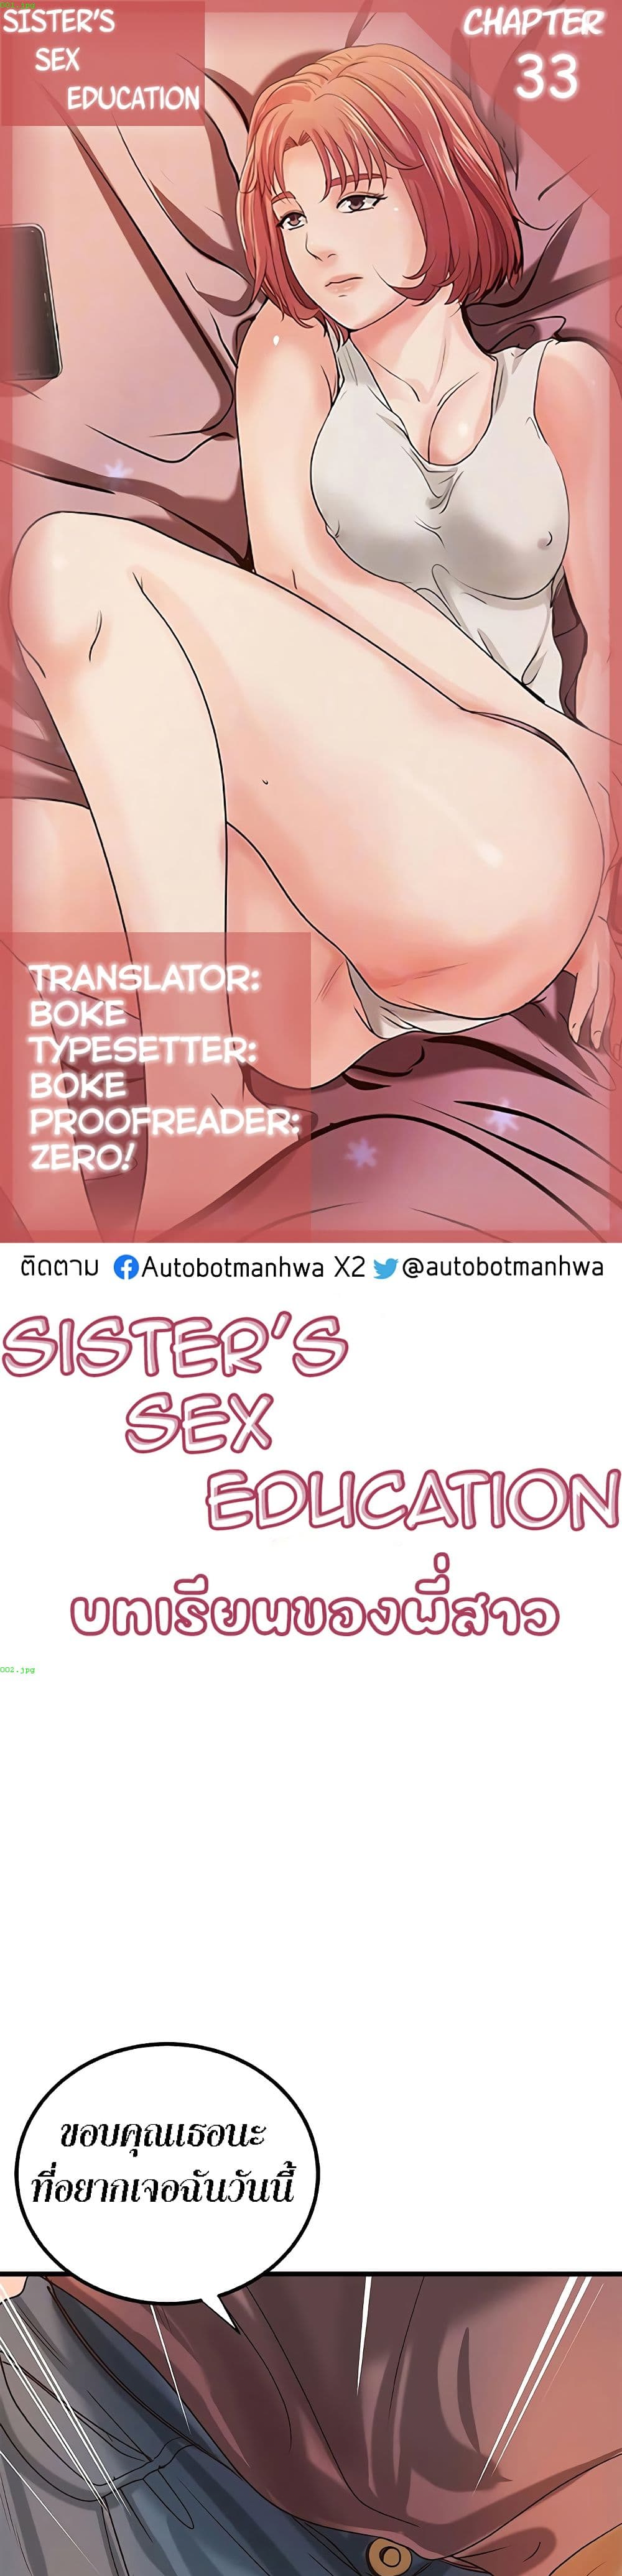 Sister's Sex Education 33 (1)